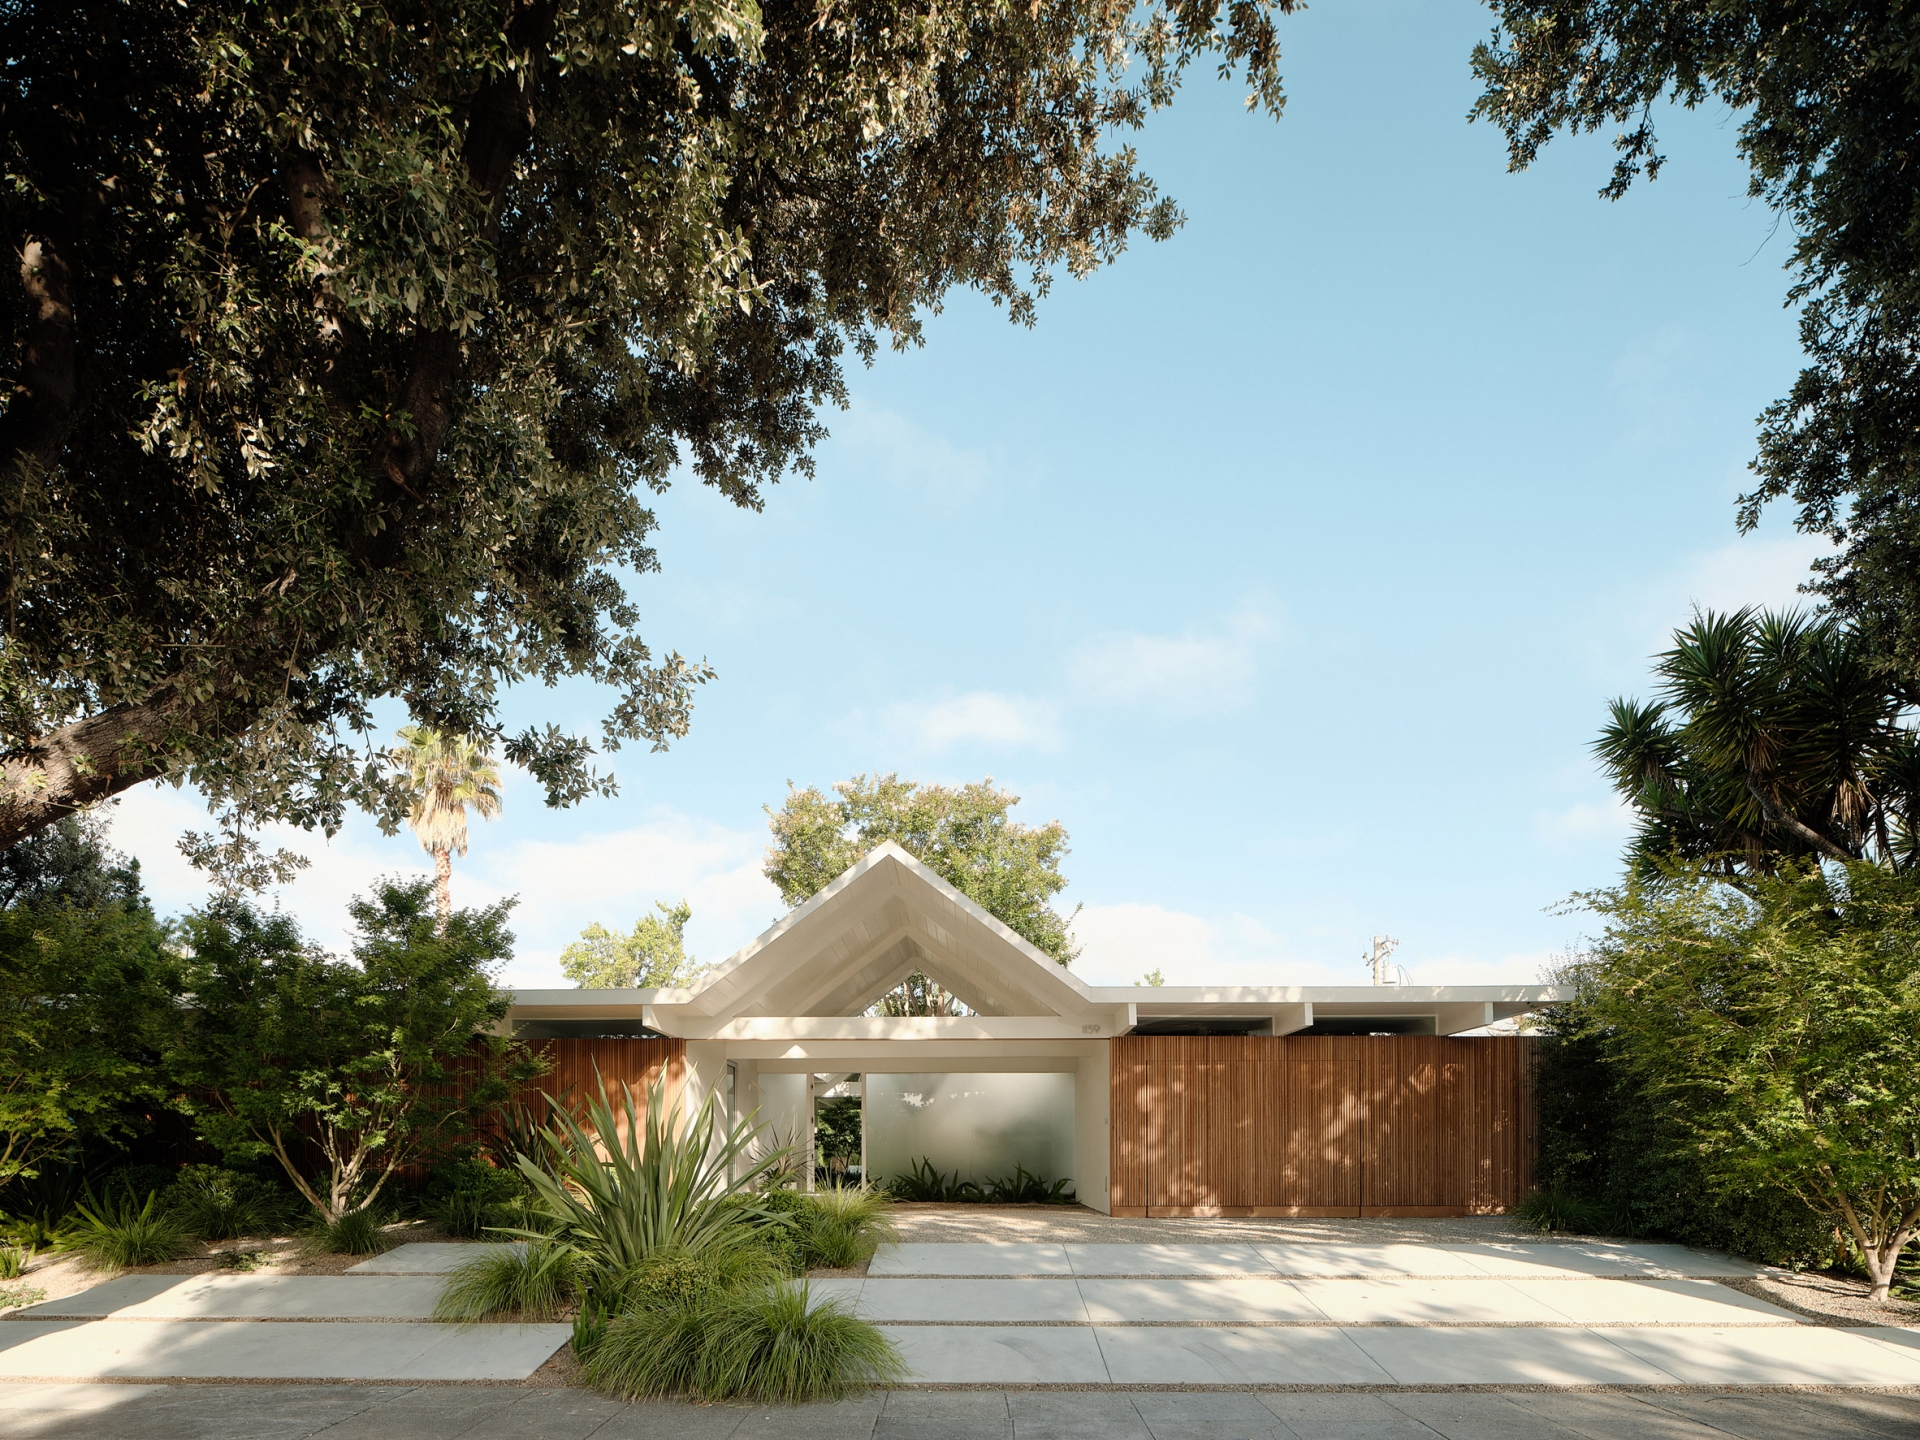 “White Twin Gable House” do đội ngũ của Ryan Leidner Architecture (trụ sở tại California, Hoa Kỳ) thiết kế. 